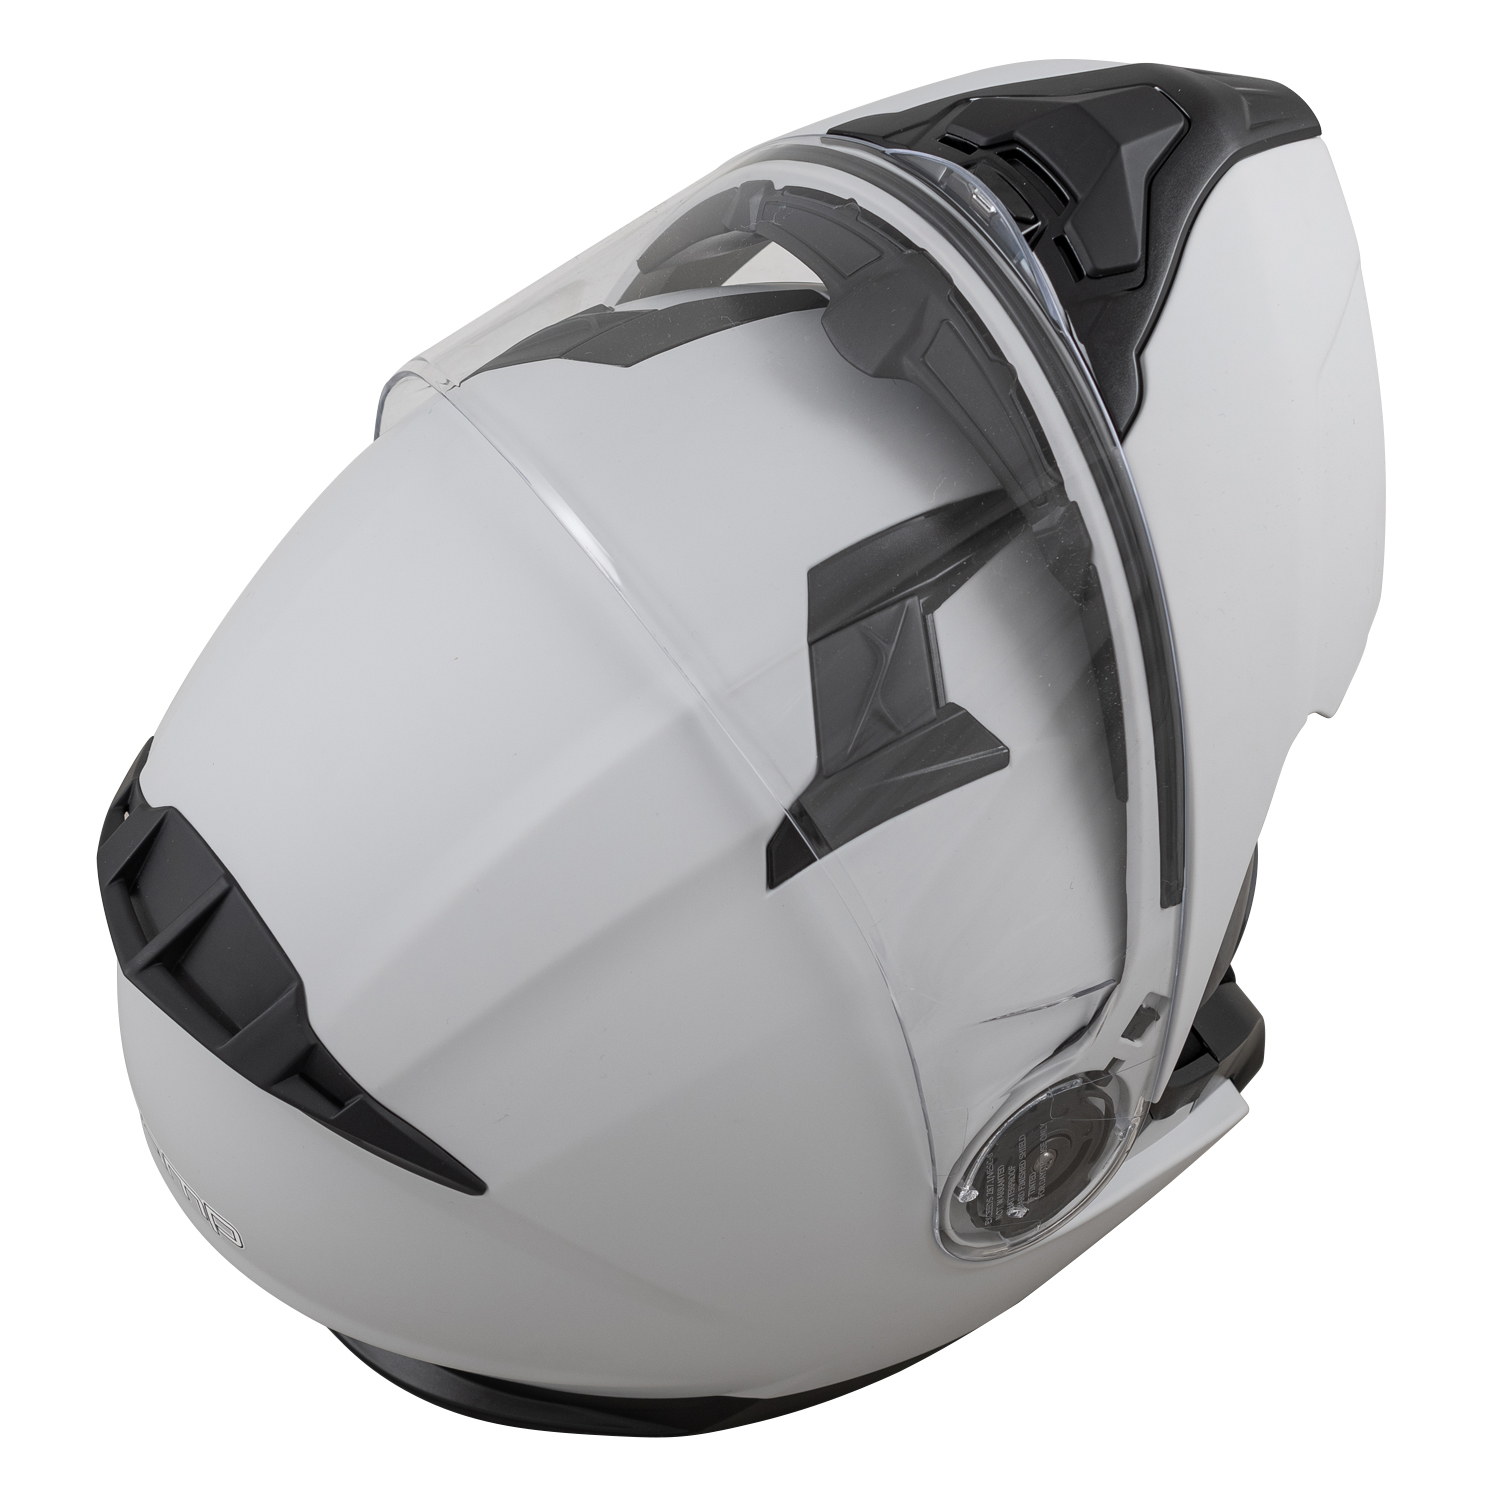 FL-4 Matte Gray Helmet